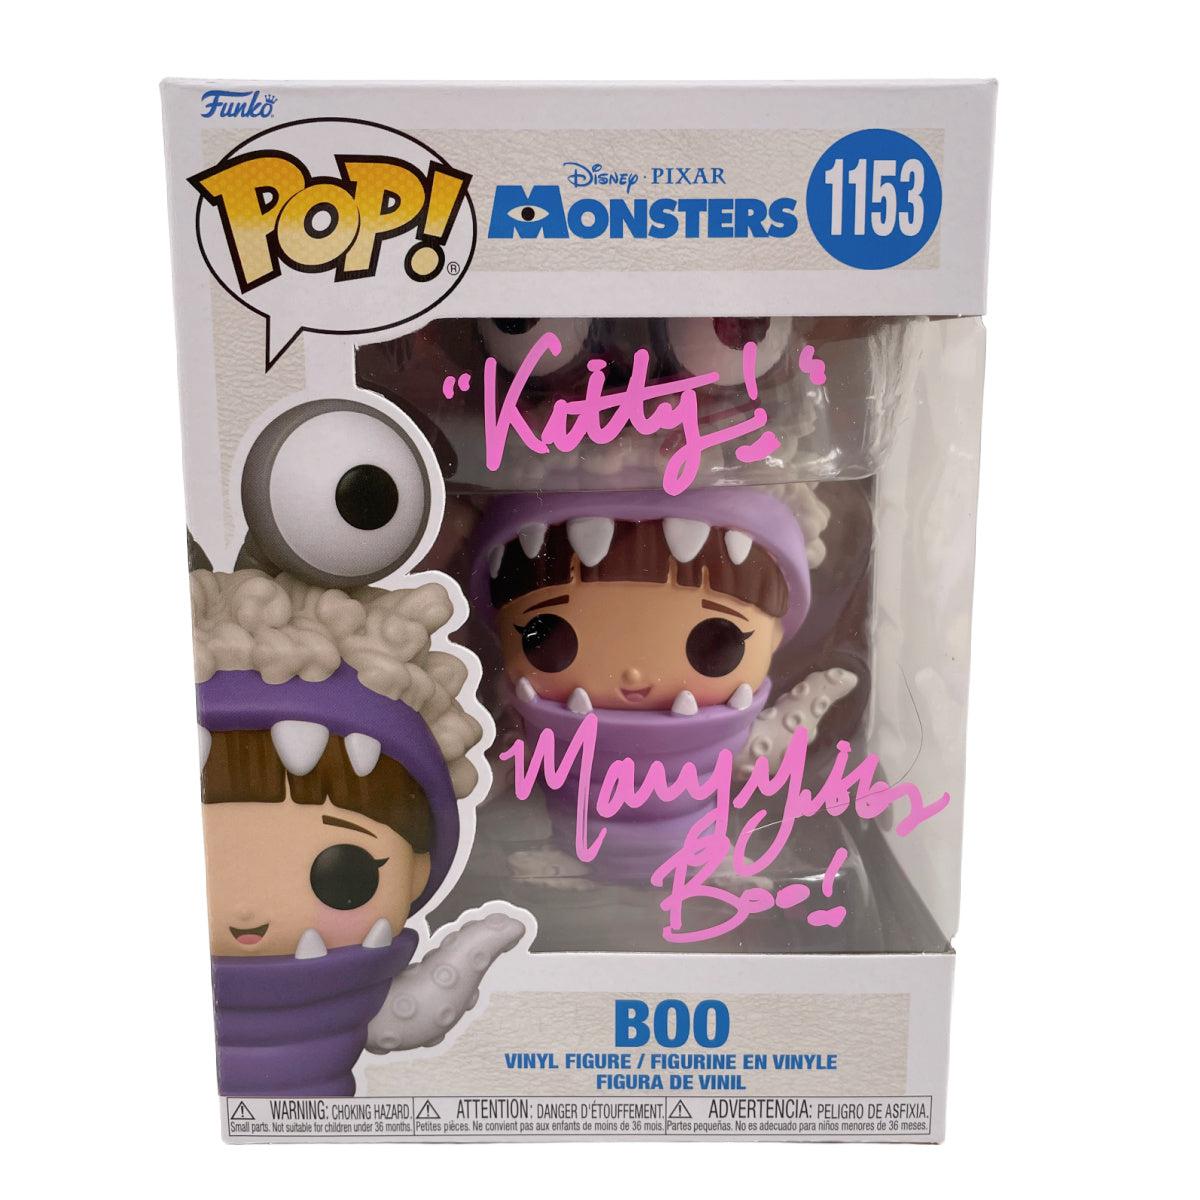 Mary Gibbs Signed Funko POP Disney Pixar Monsters 1153 Boo Autographed JSA 6